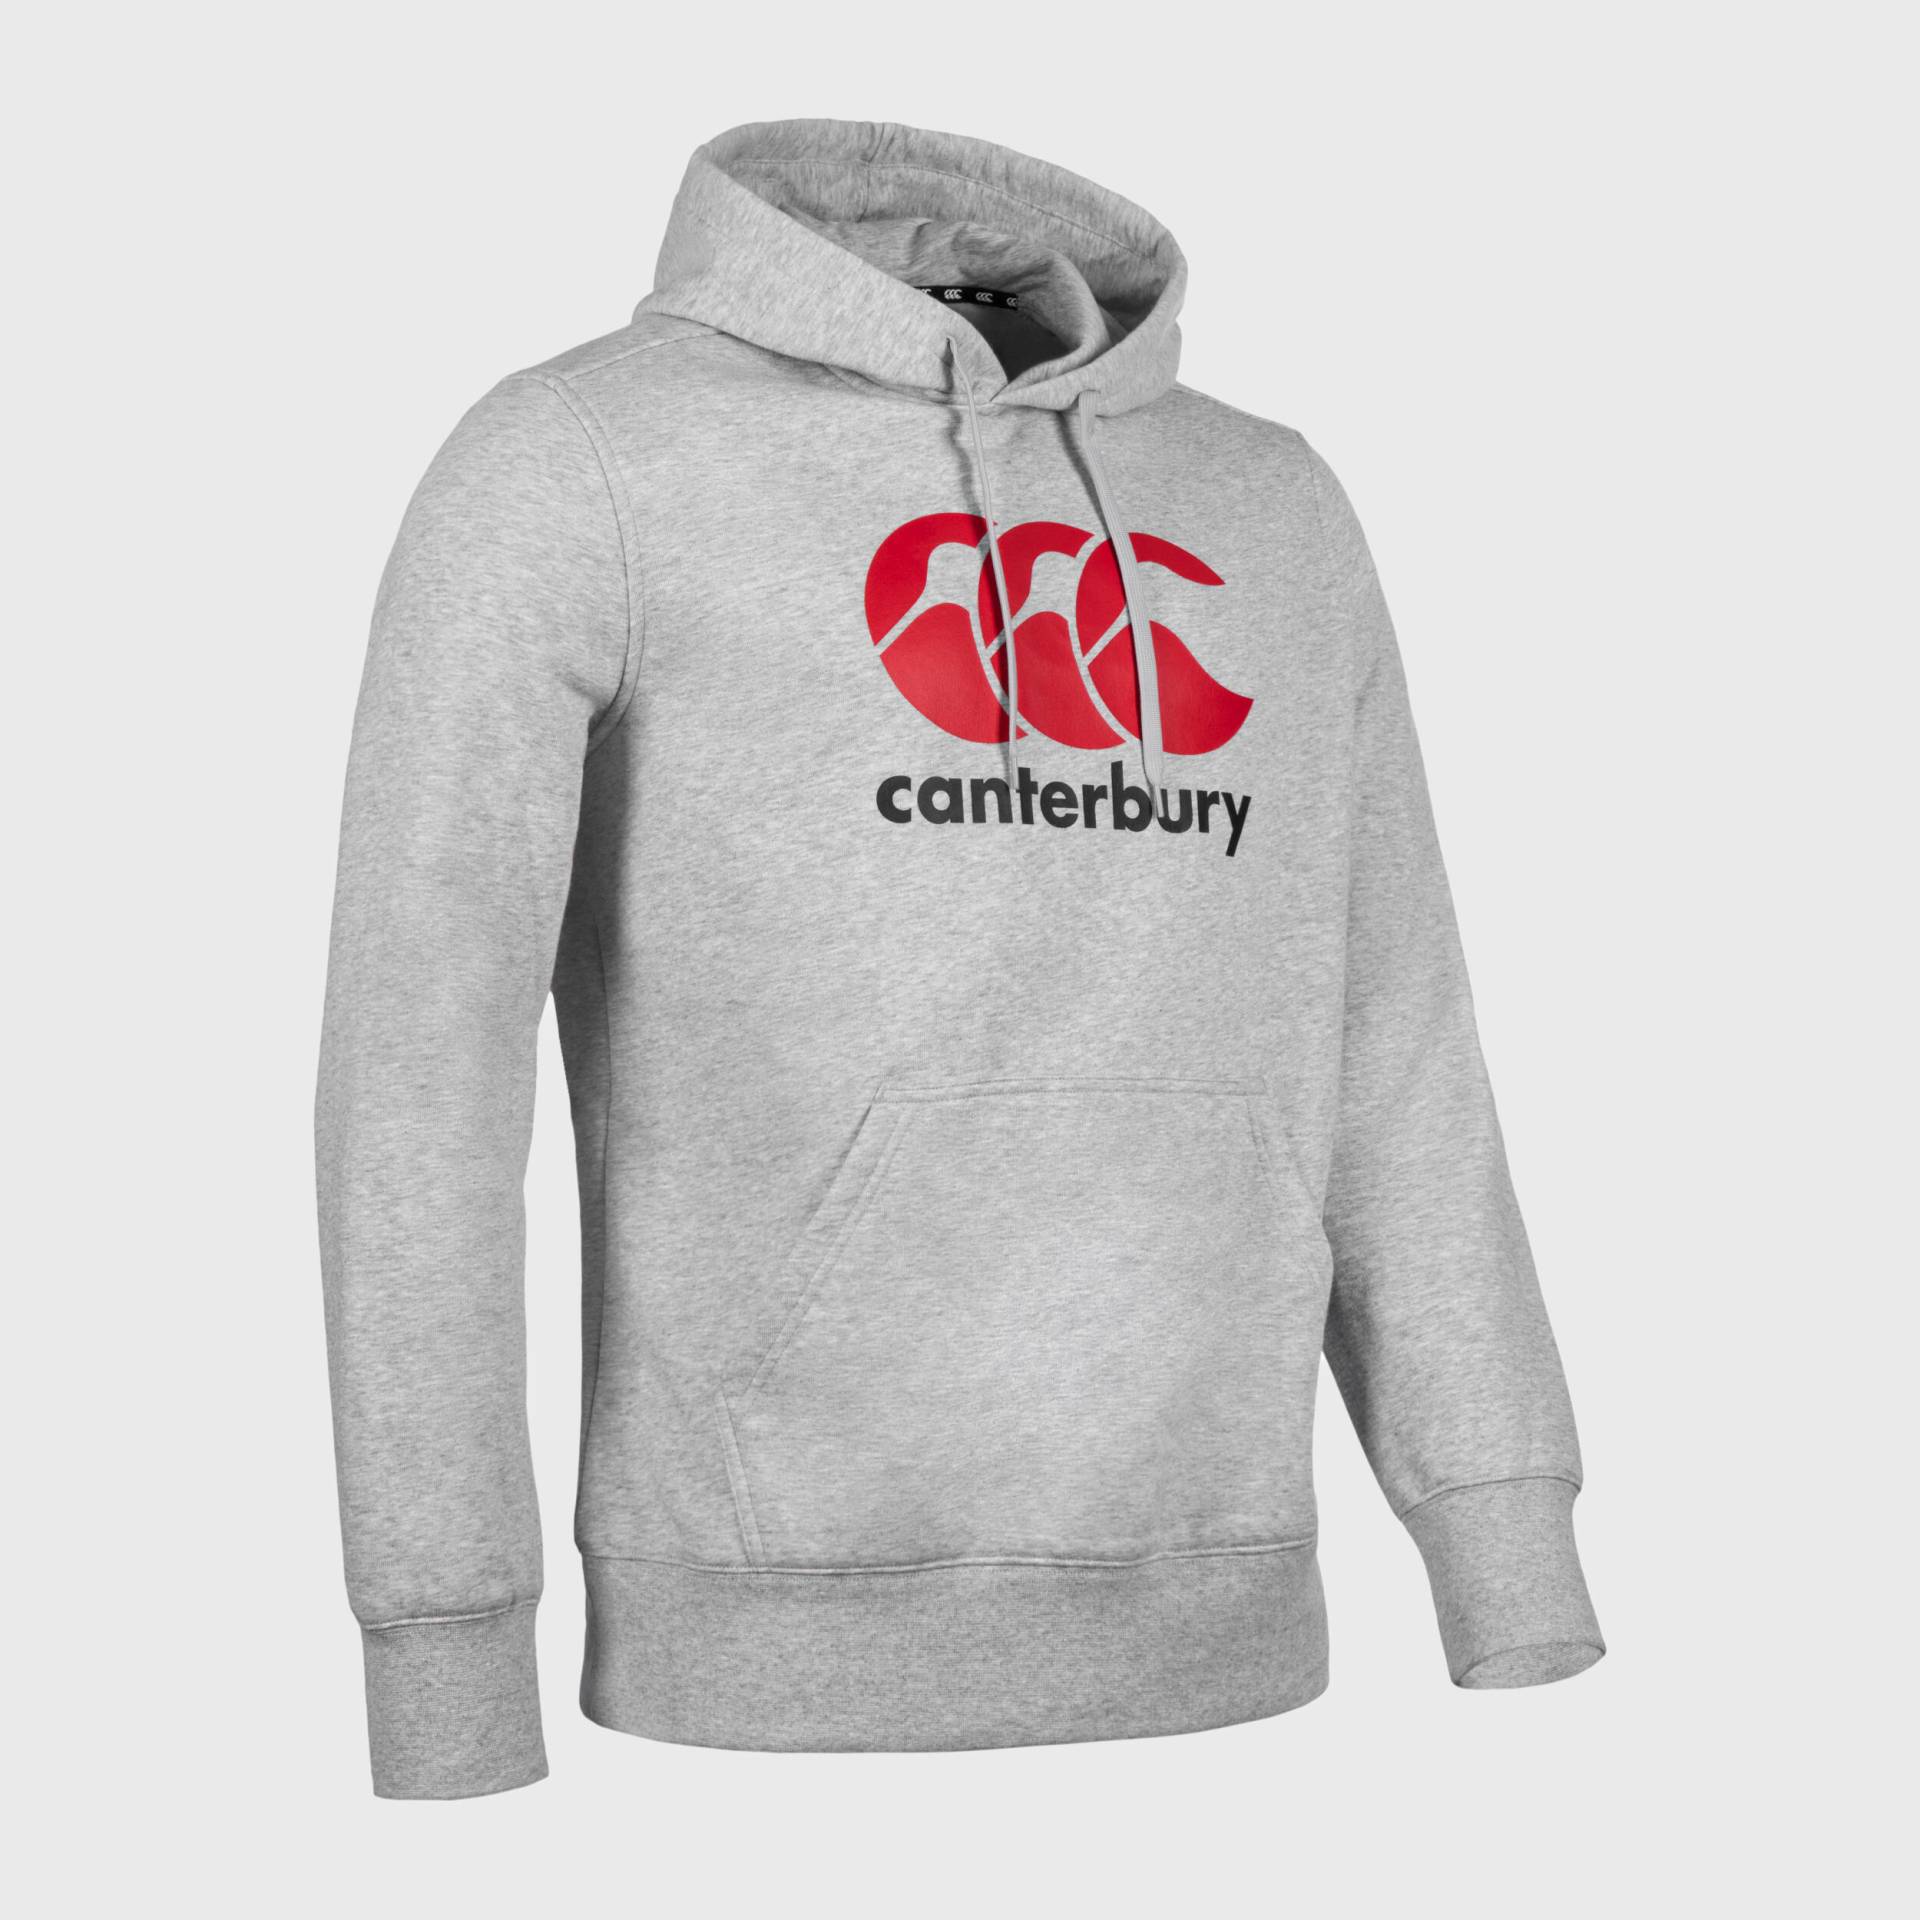 Damen/Herren Rugby Hoodie - Canterbury Sweat-Hoodie grau von Canterbury